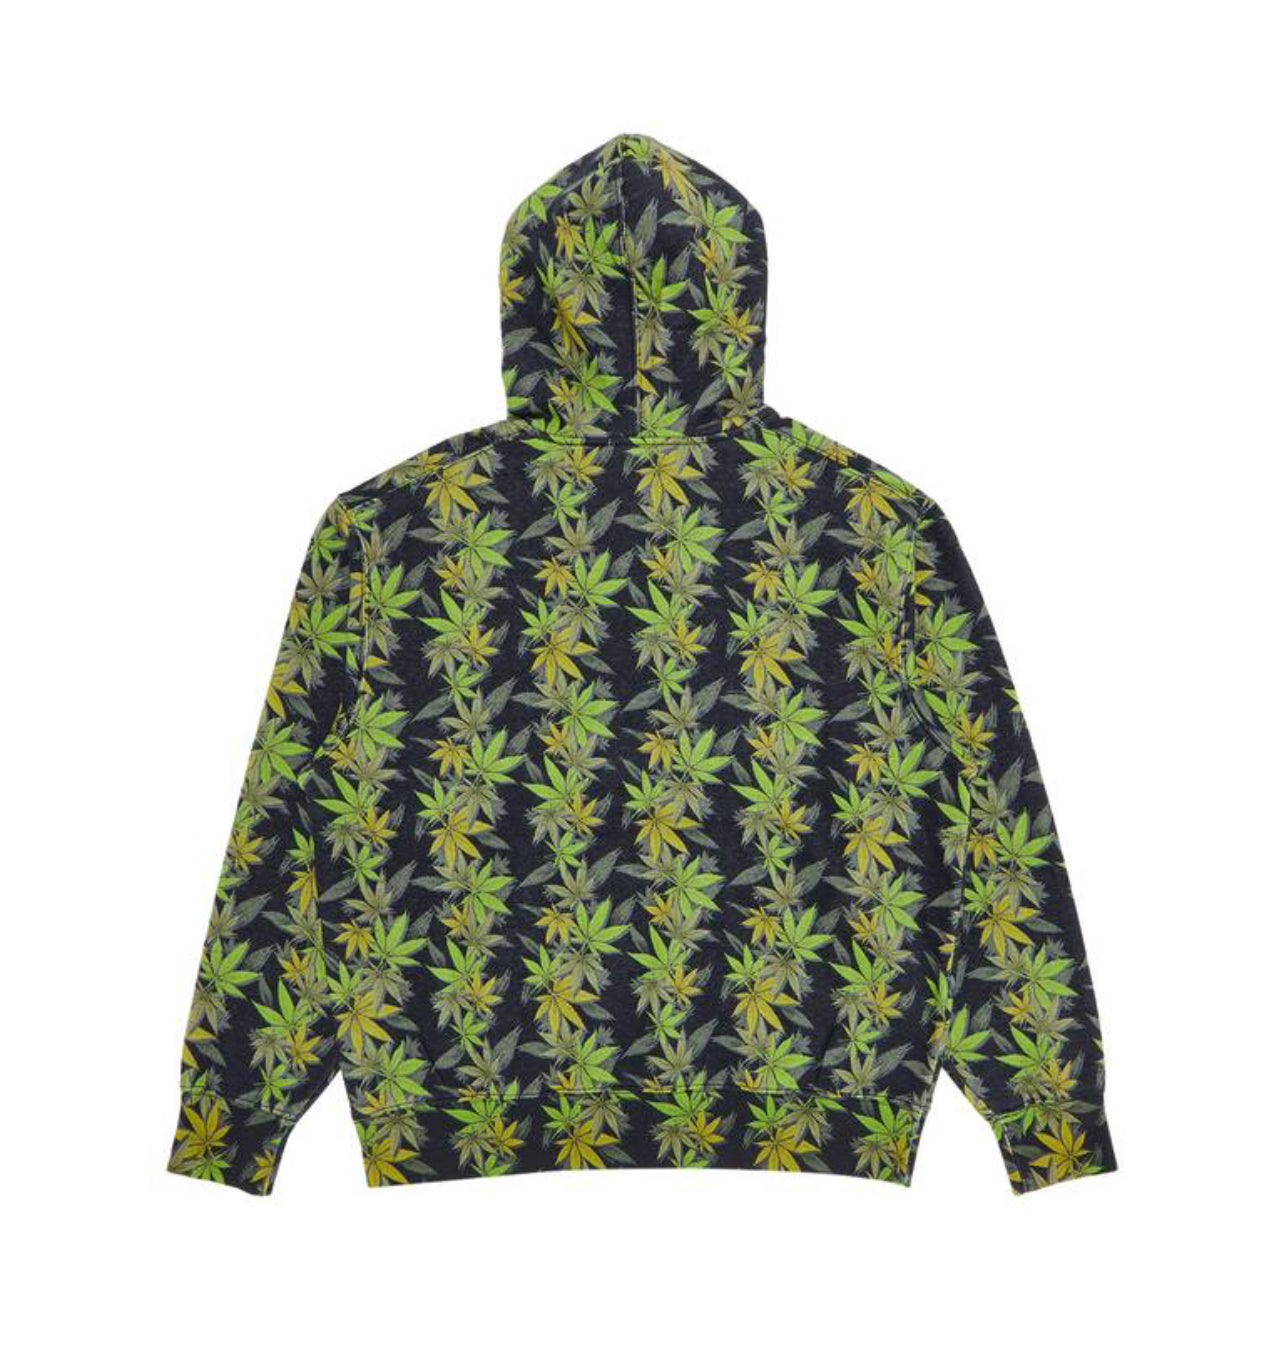 Supreme x The North Face Leaf Hooded Sweatshirt “Black”